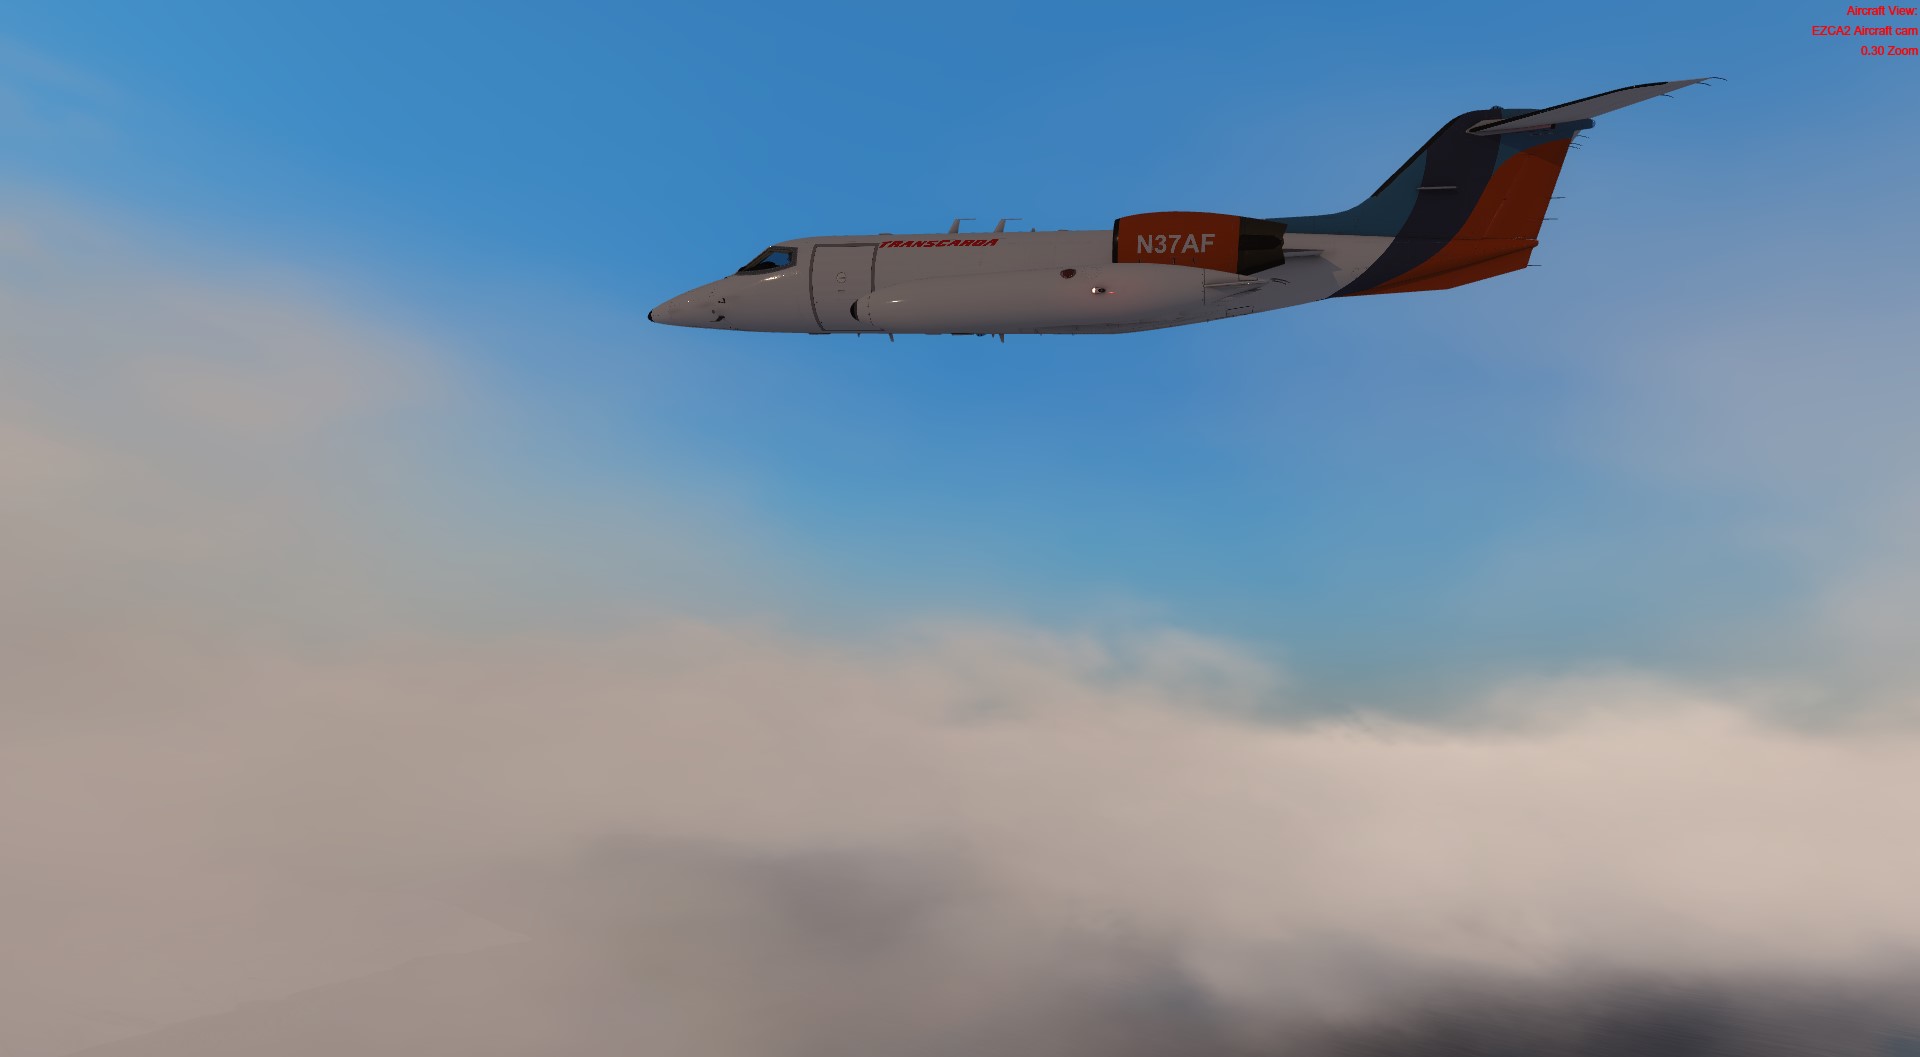 Flysimware – Learjet 35A 评测与冰岛送货之旅-3781 